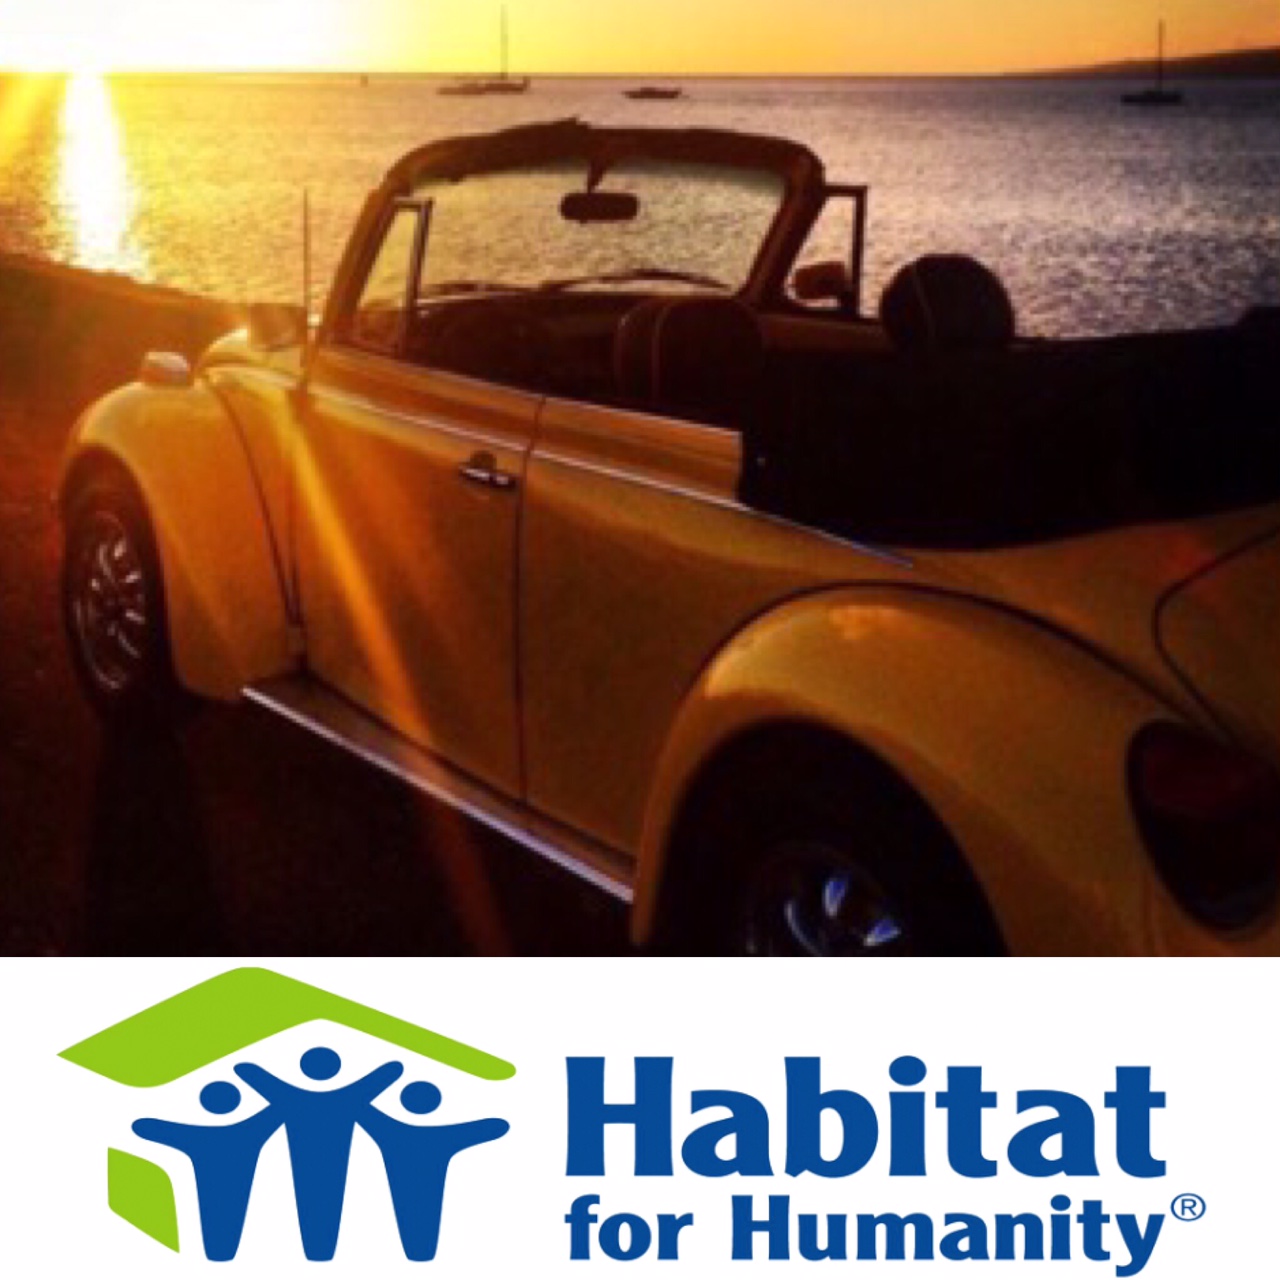 1975 Volkswagen Beetle Donated to Habitat for Humanity